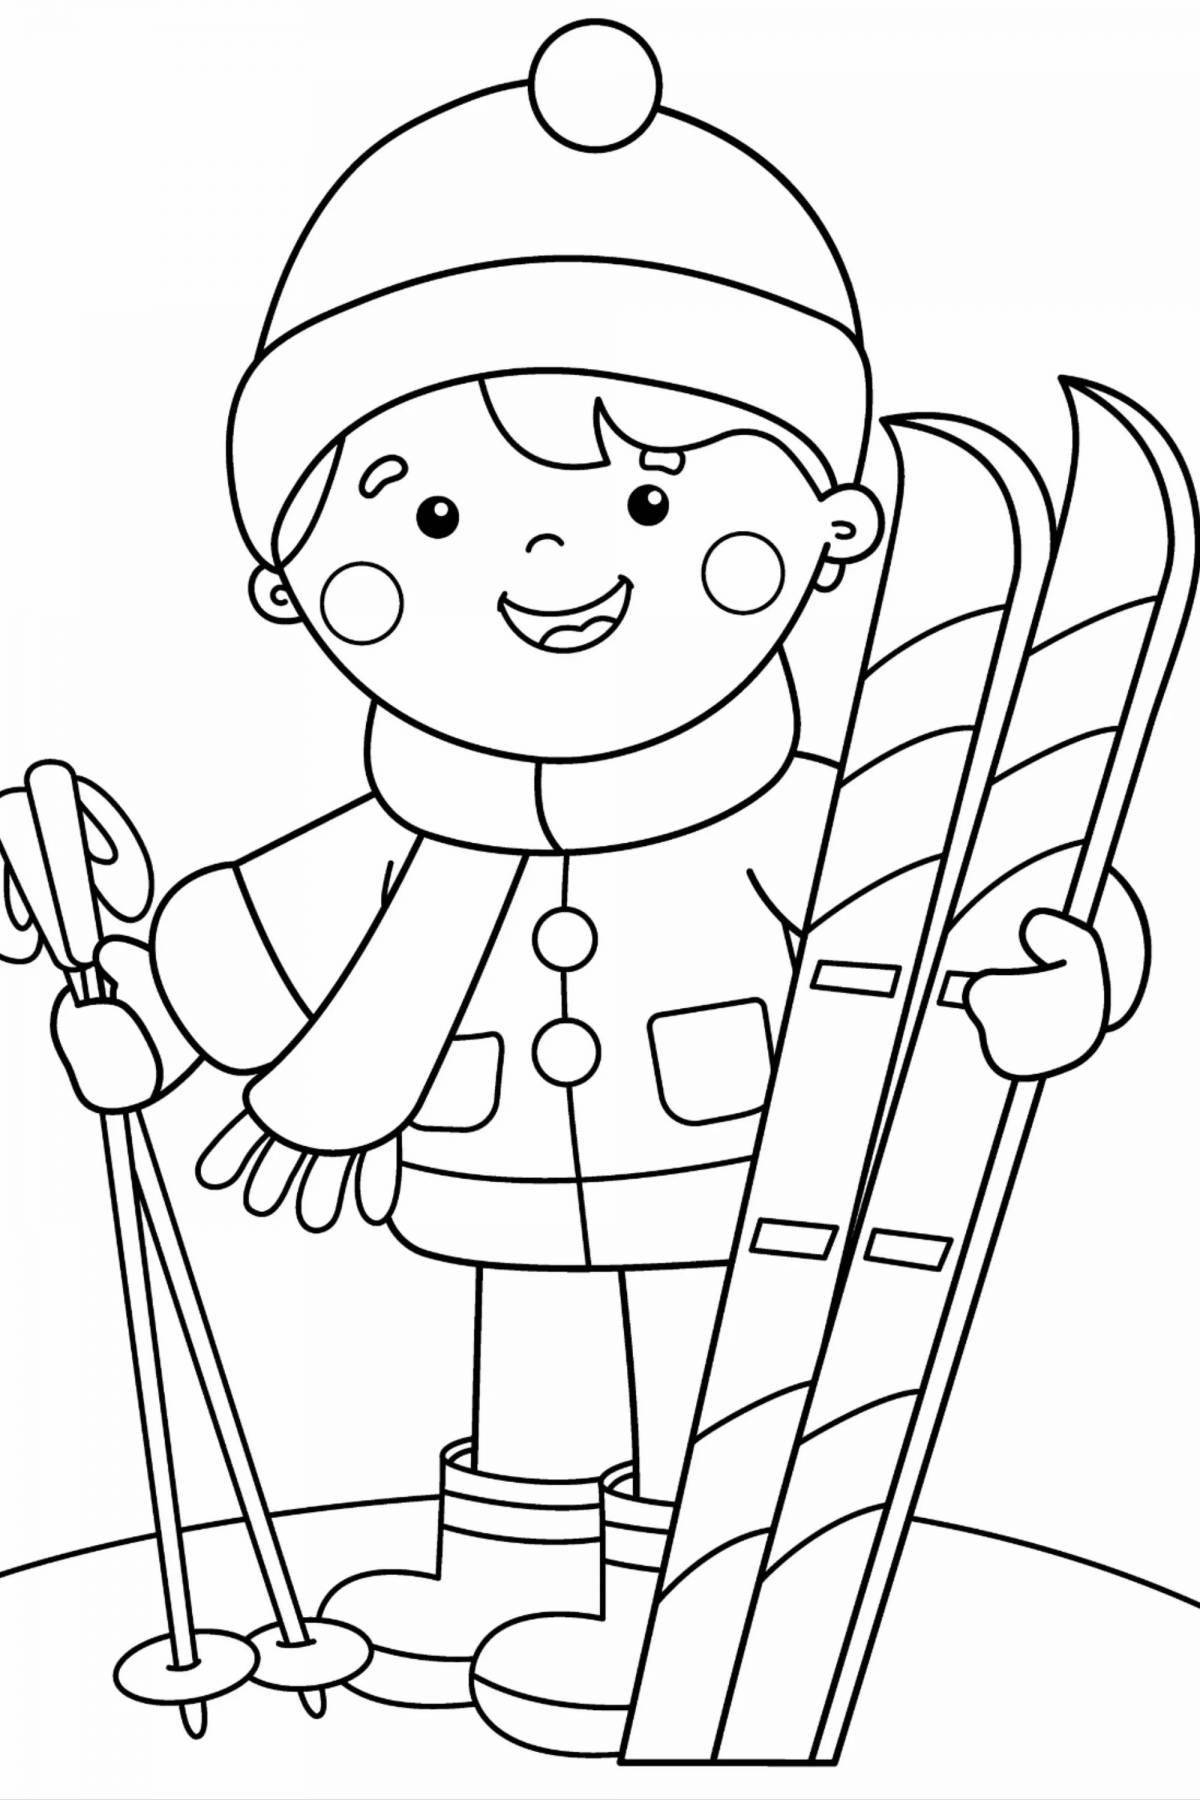 Coloring page brave skier kid